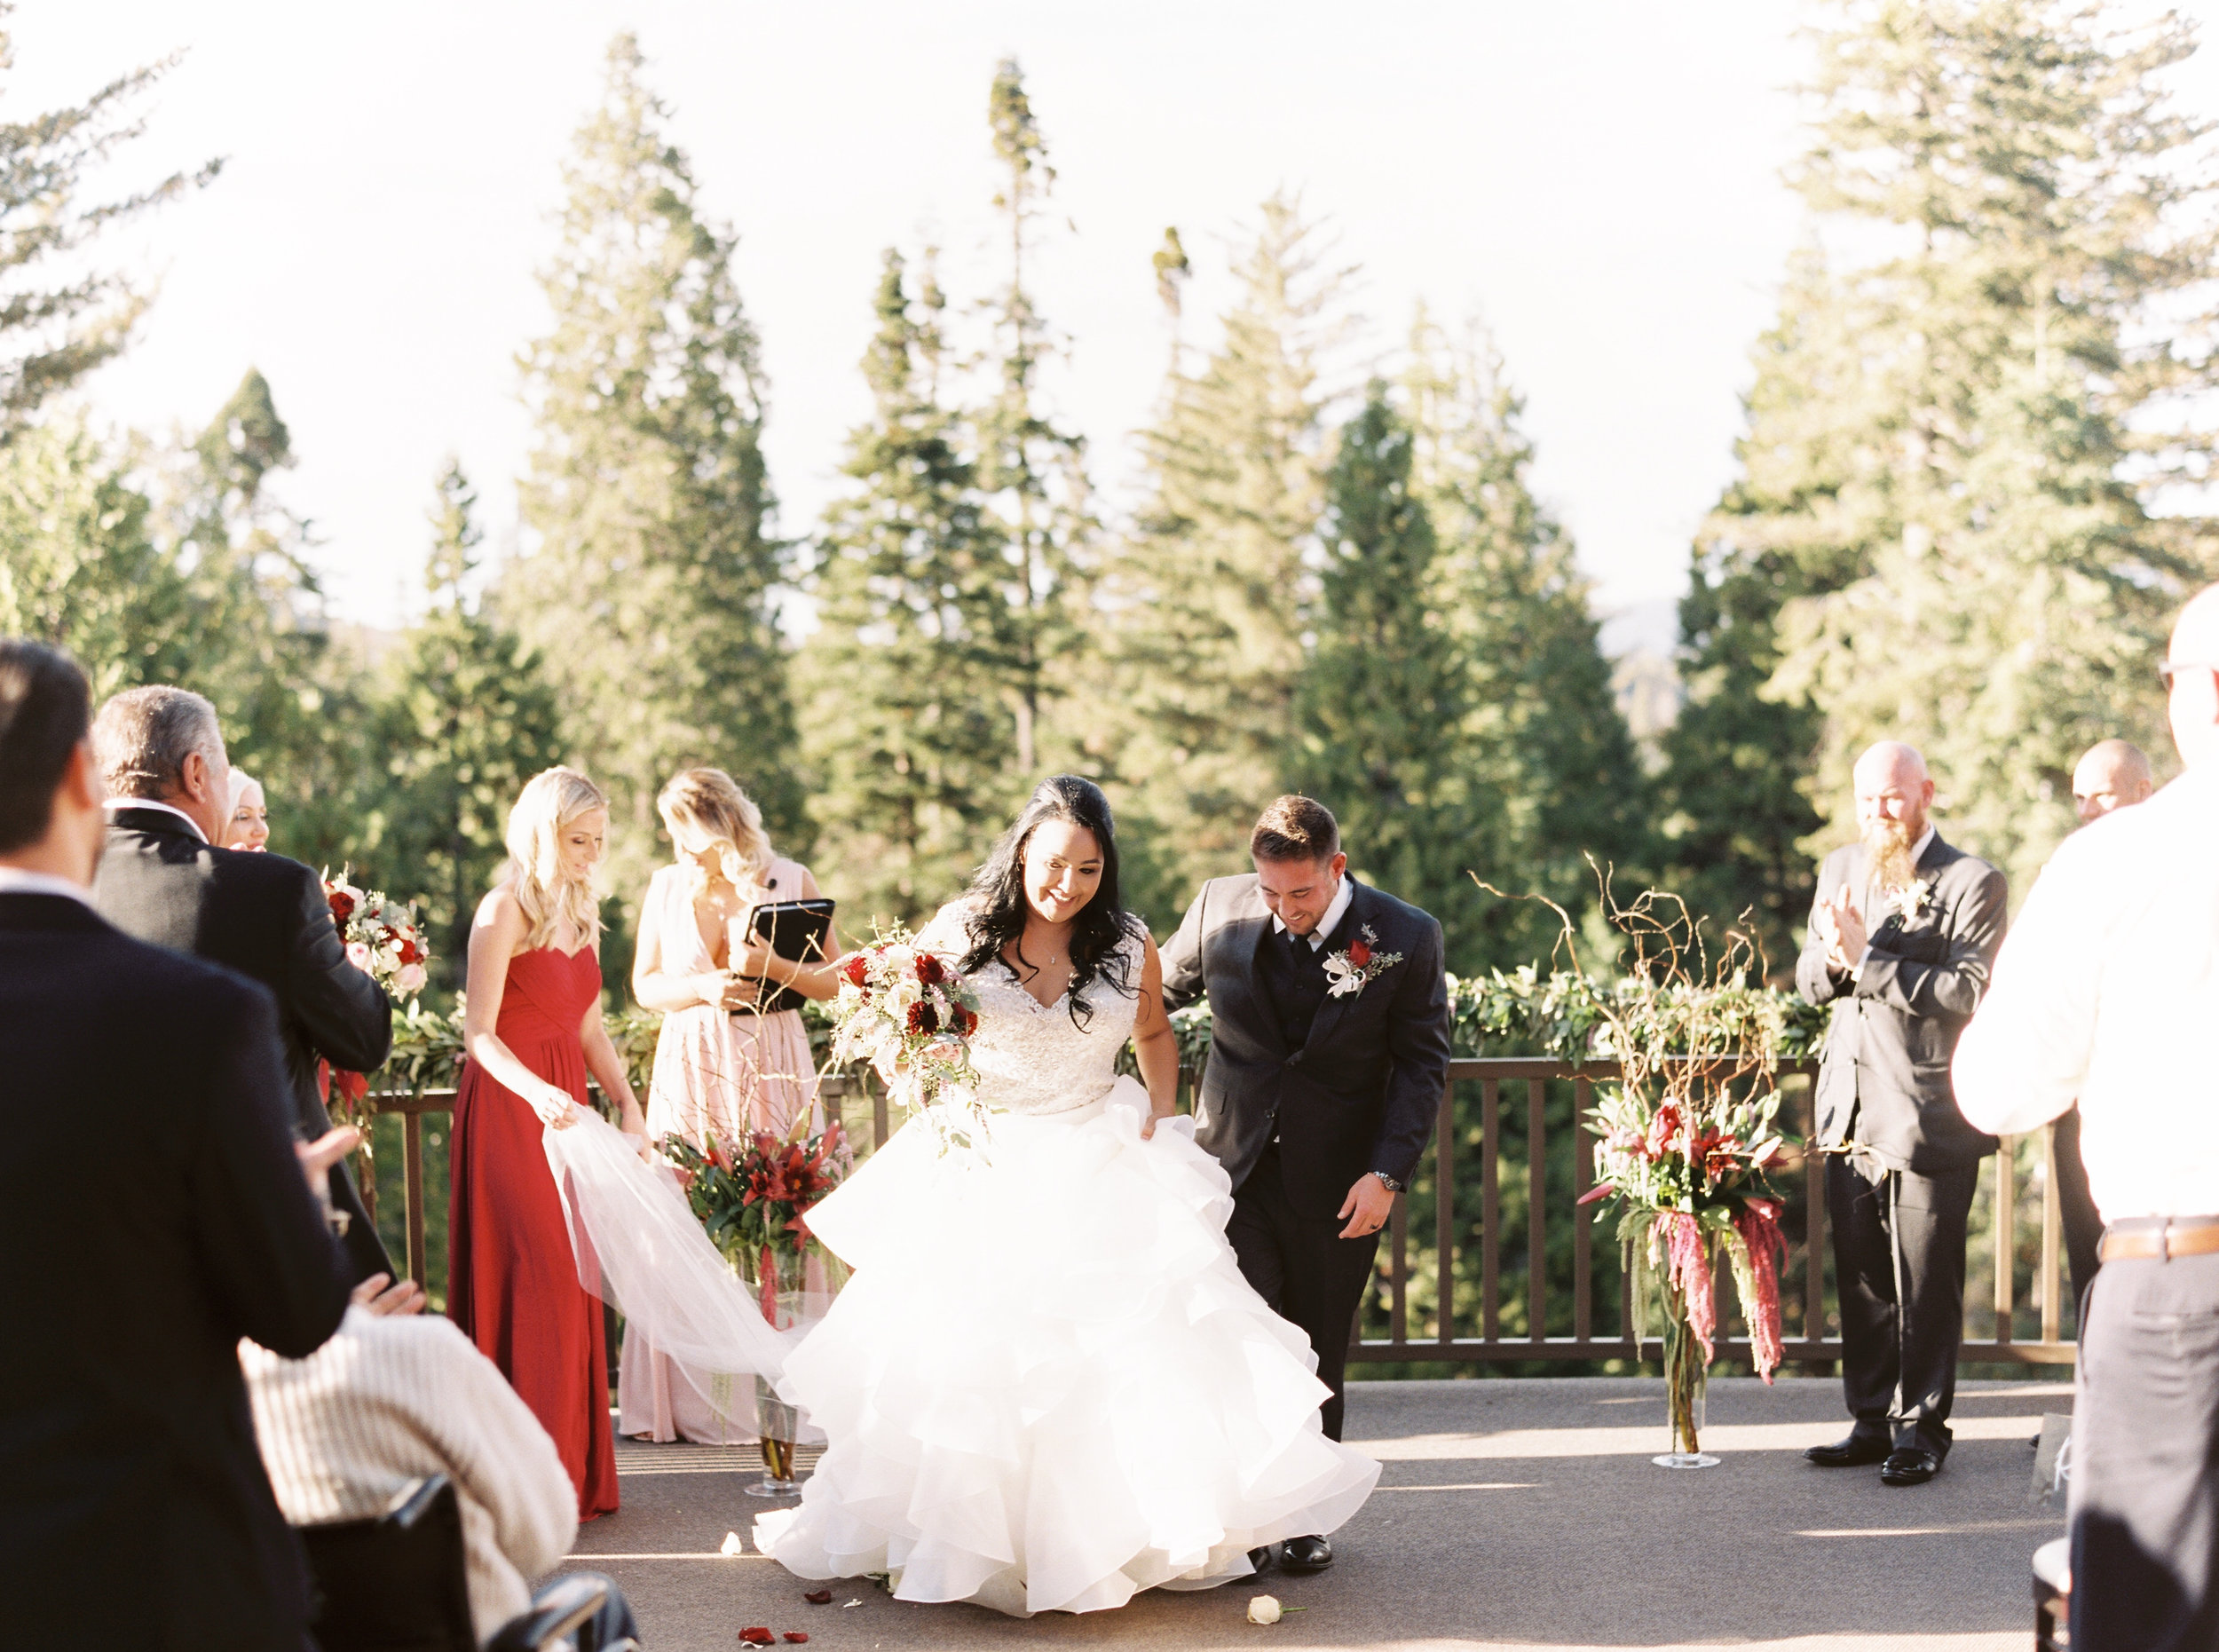 Tenaya-lodge-wedding-at-yosemite-national-park-california-83.jpg